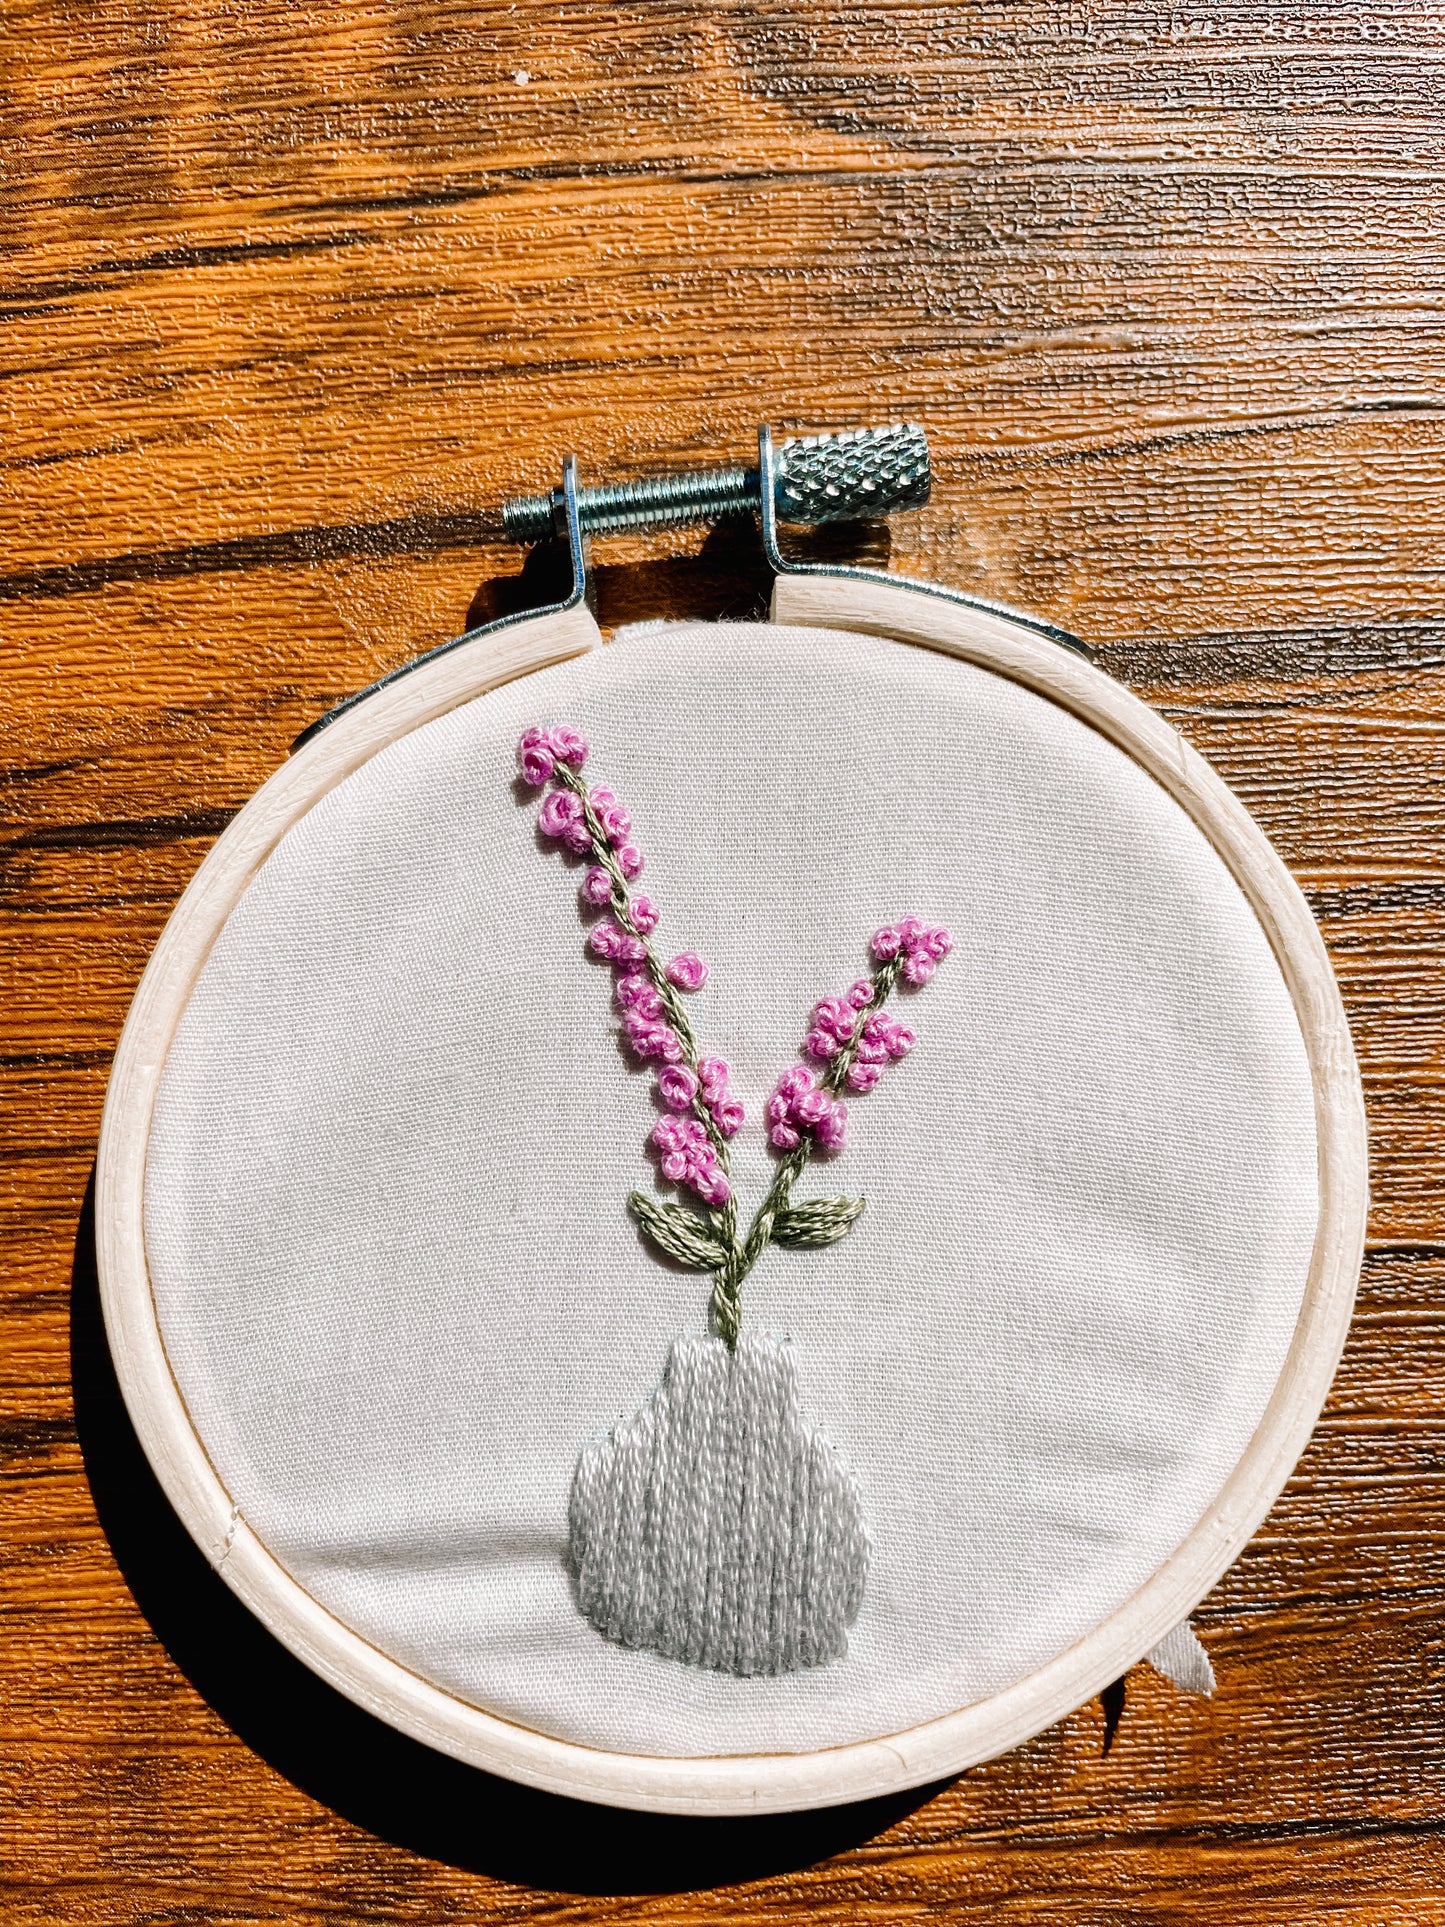 Mini Embroidery Kit